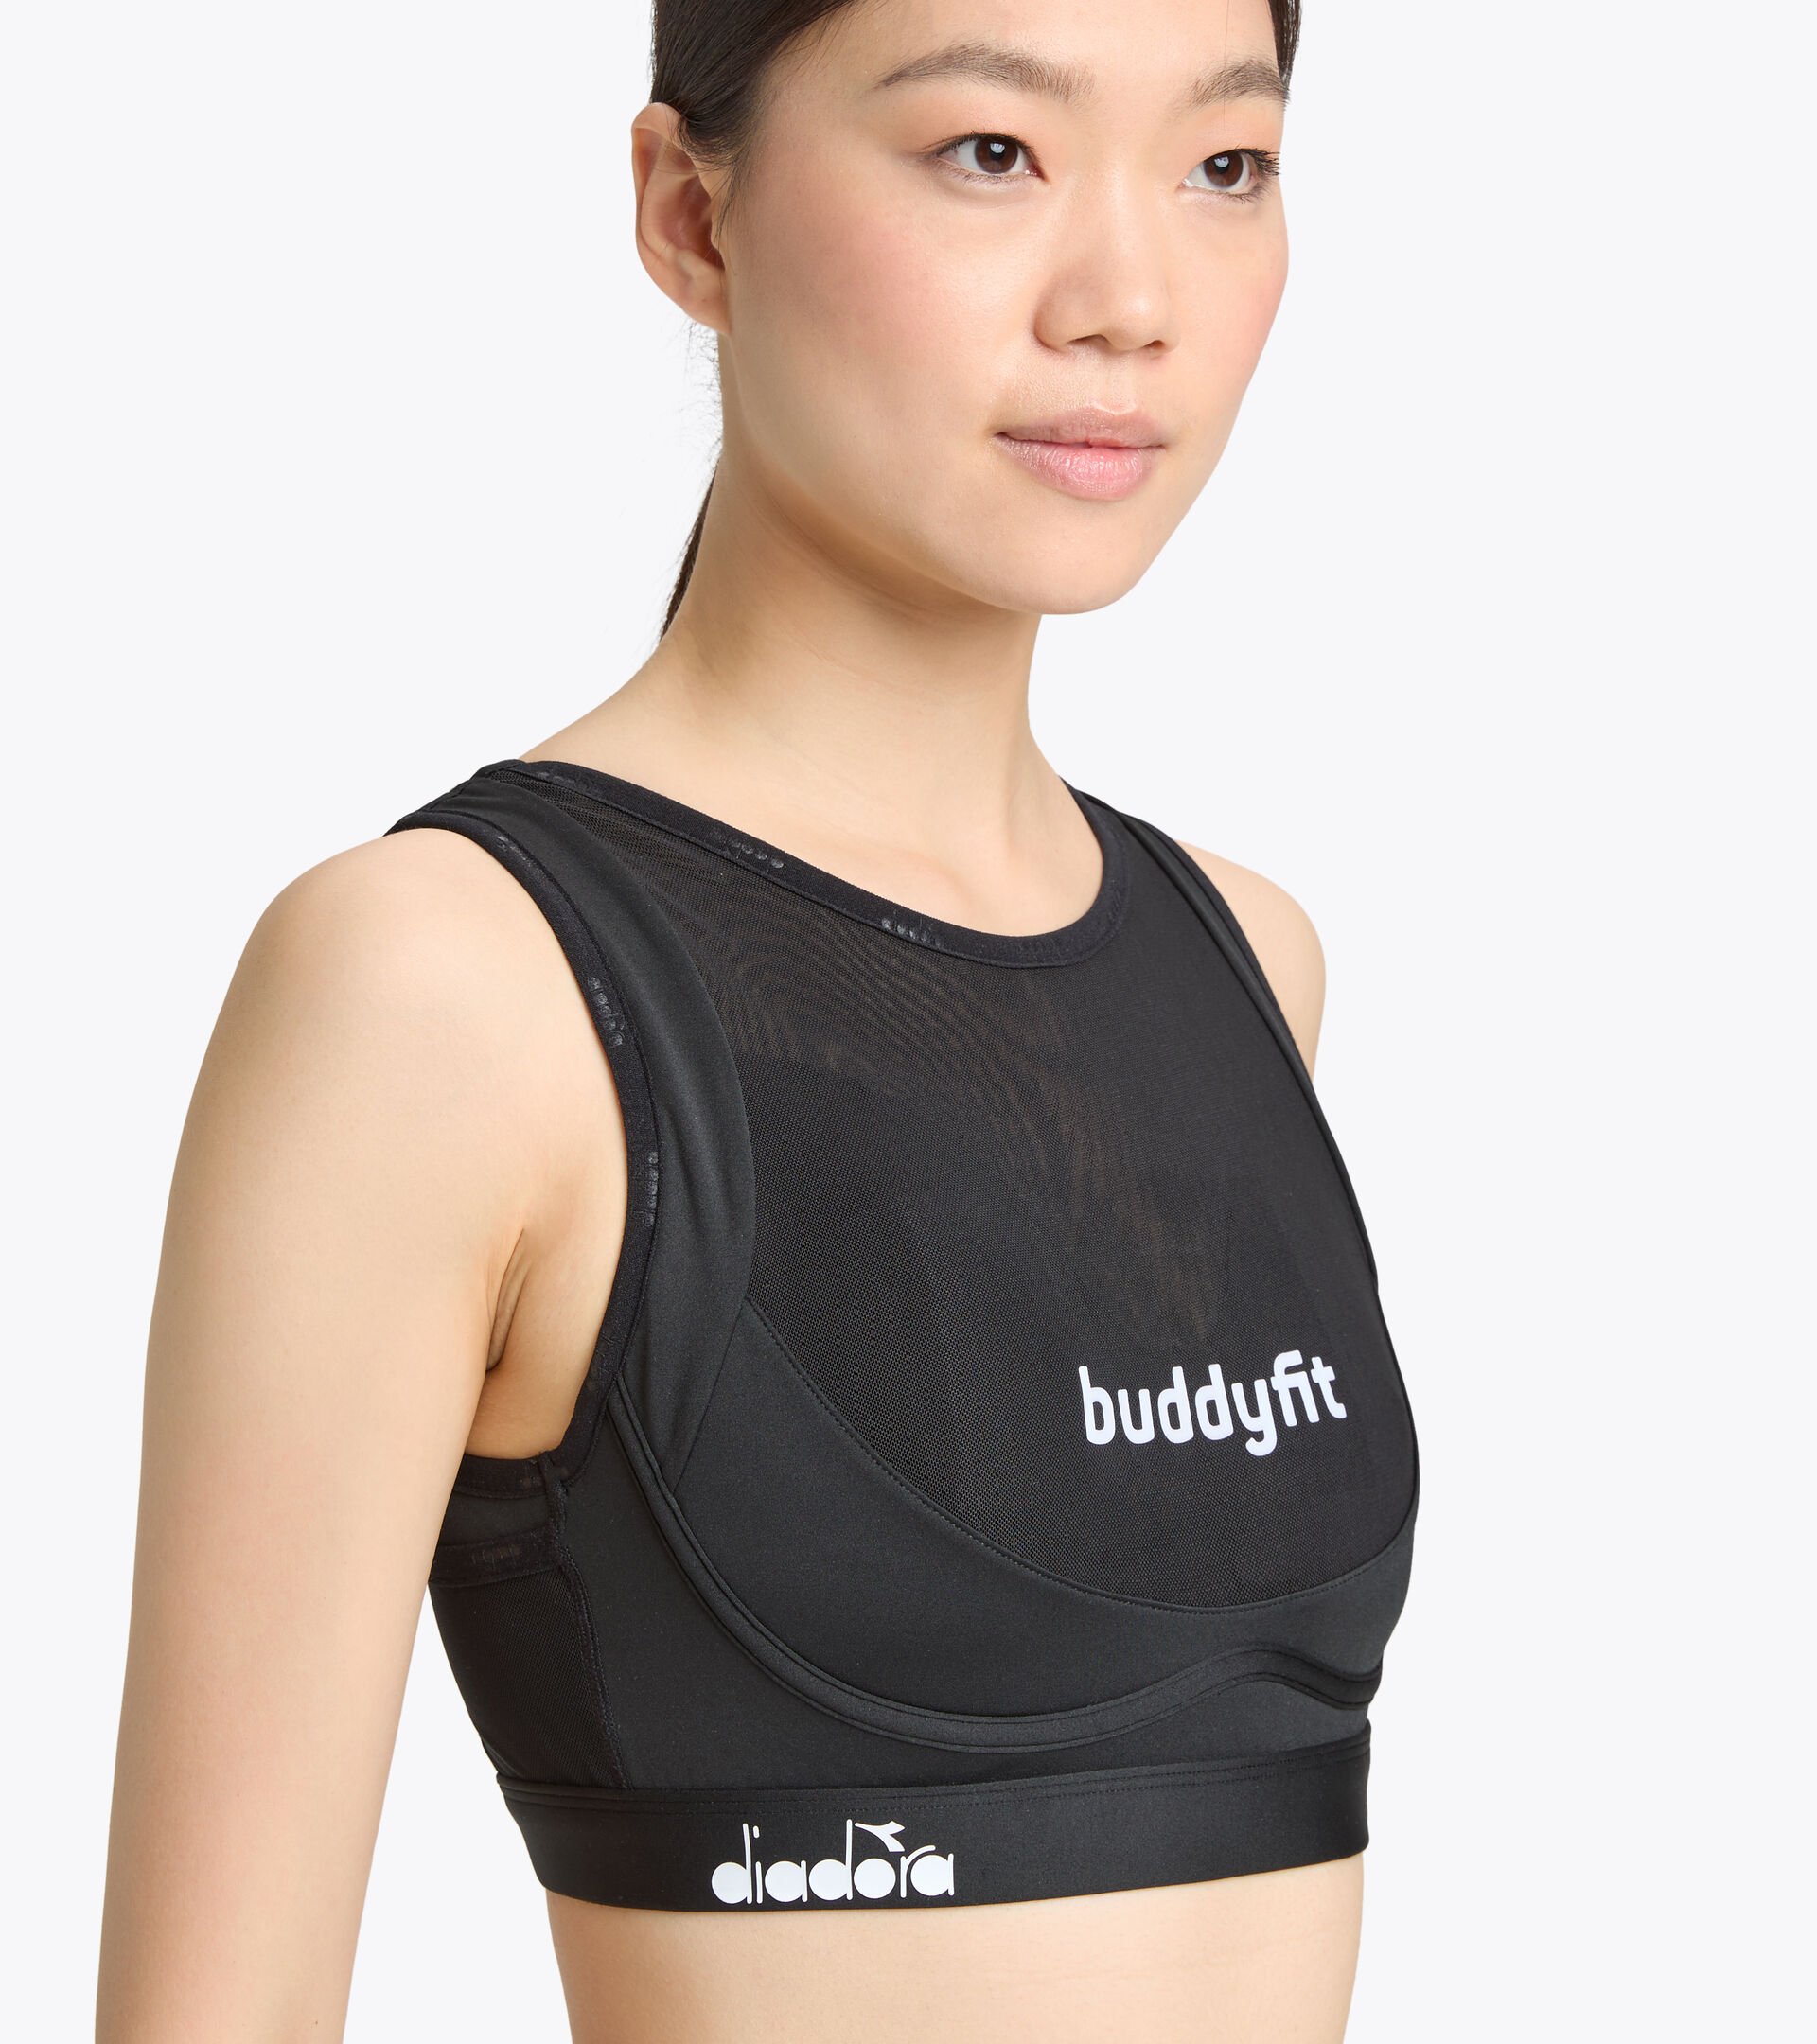 Moderate support training bra - Women’s L. MEDIUM HIGH BRA BUDDYFIT BLACK - Diadora